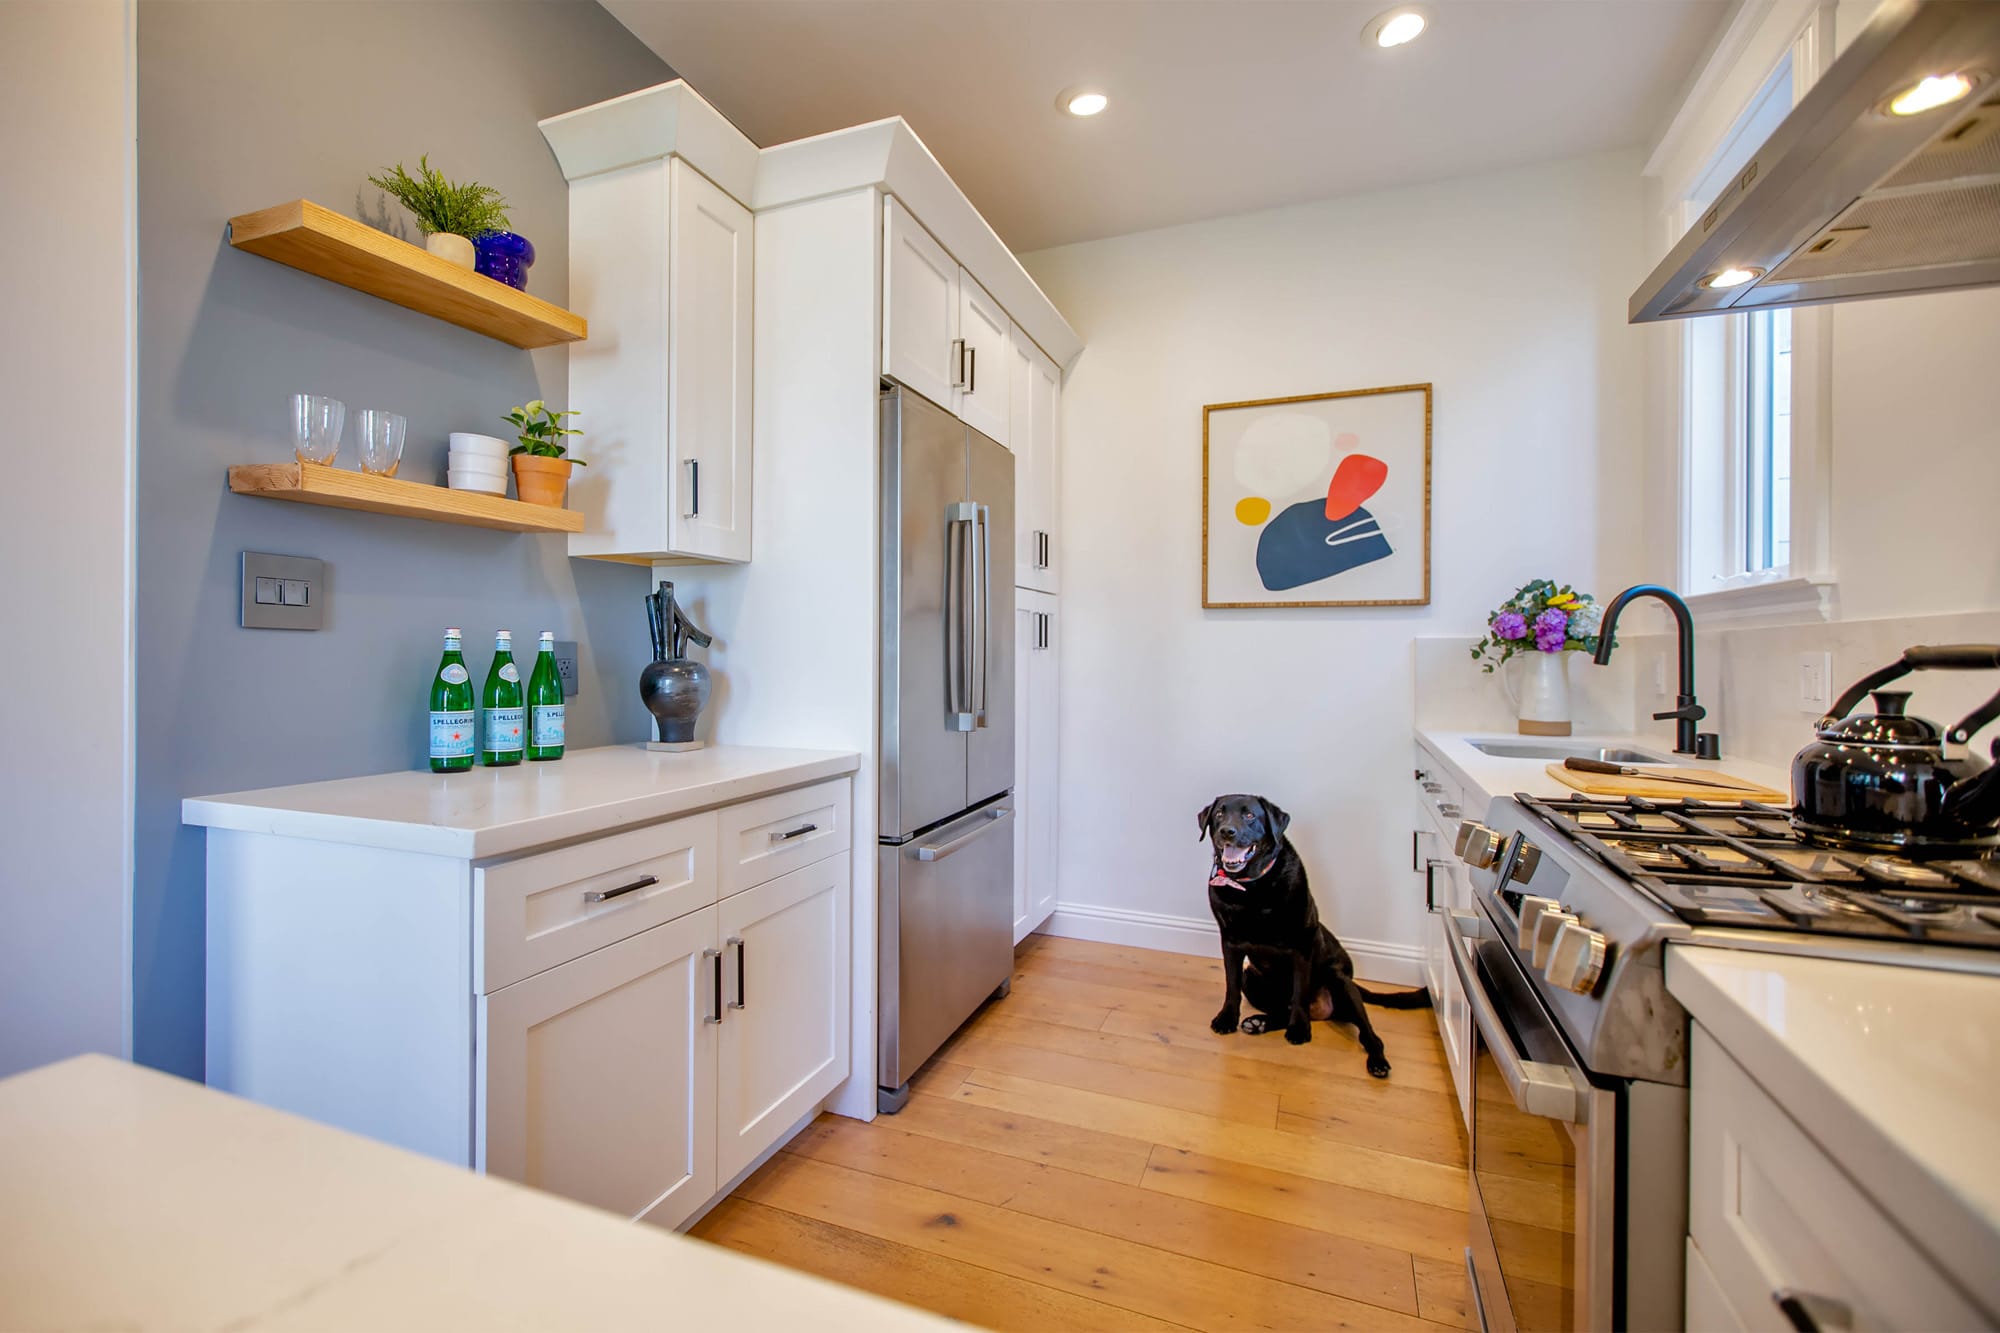 Mr. Raffi, our black Labrador retriever, in 814 Carolina's kitchen waiting for a treat. 